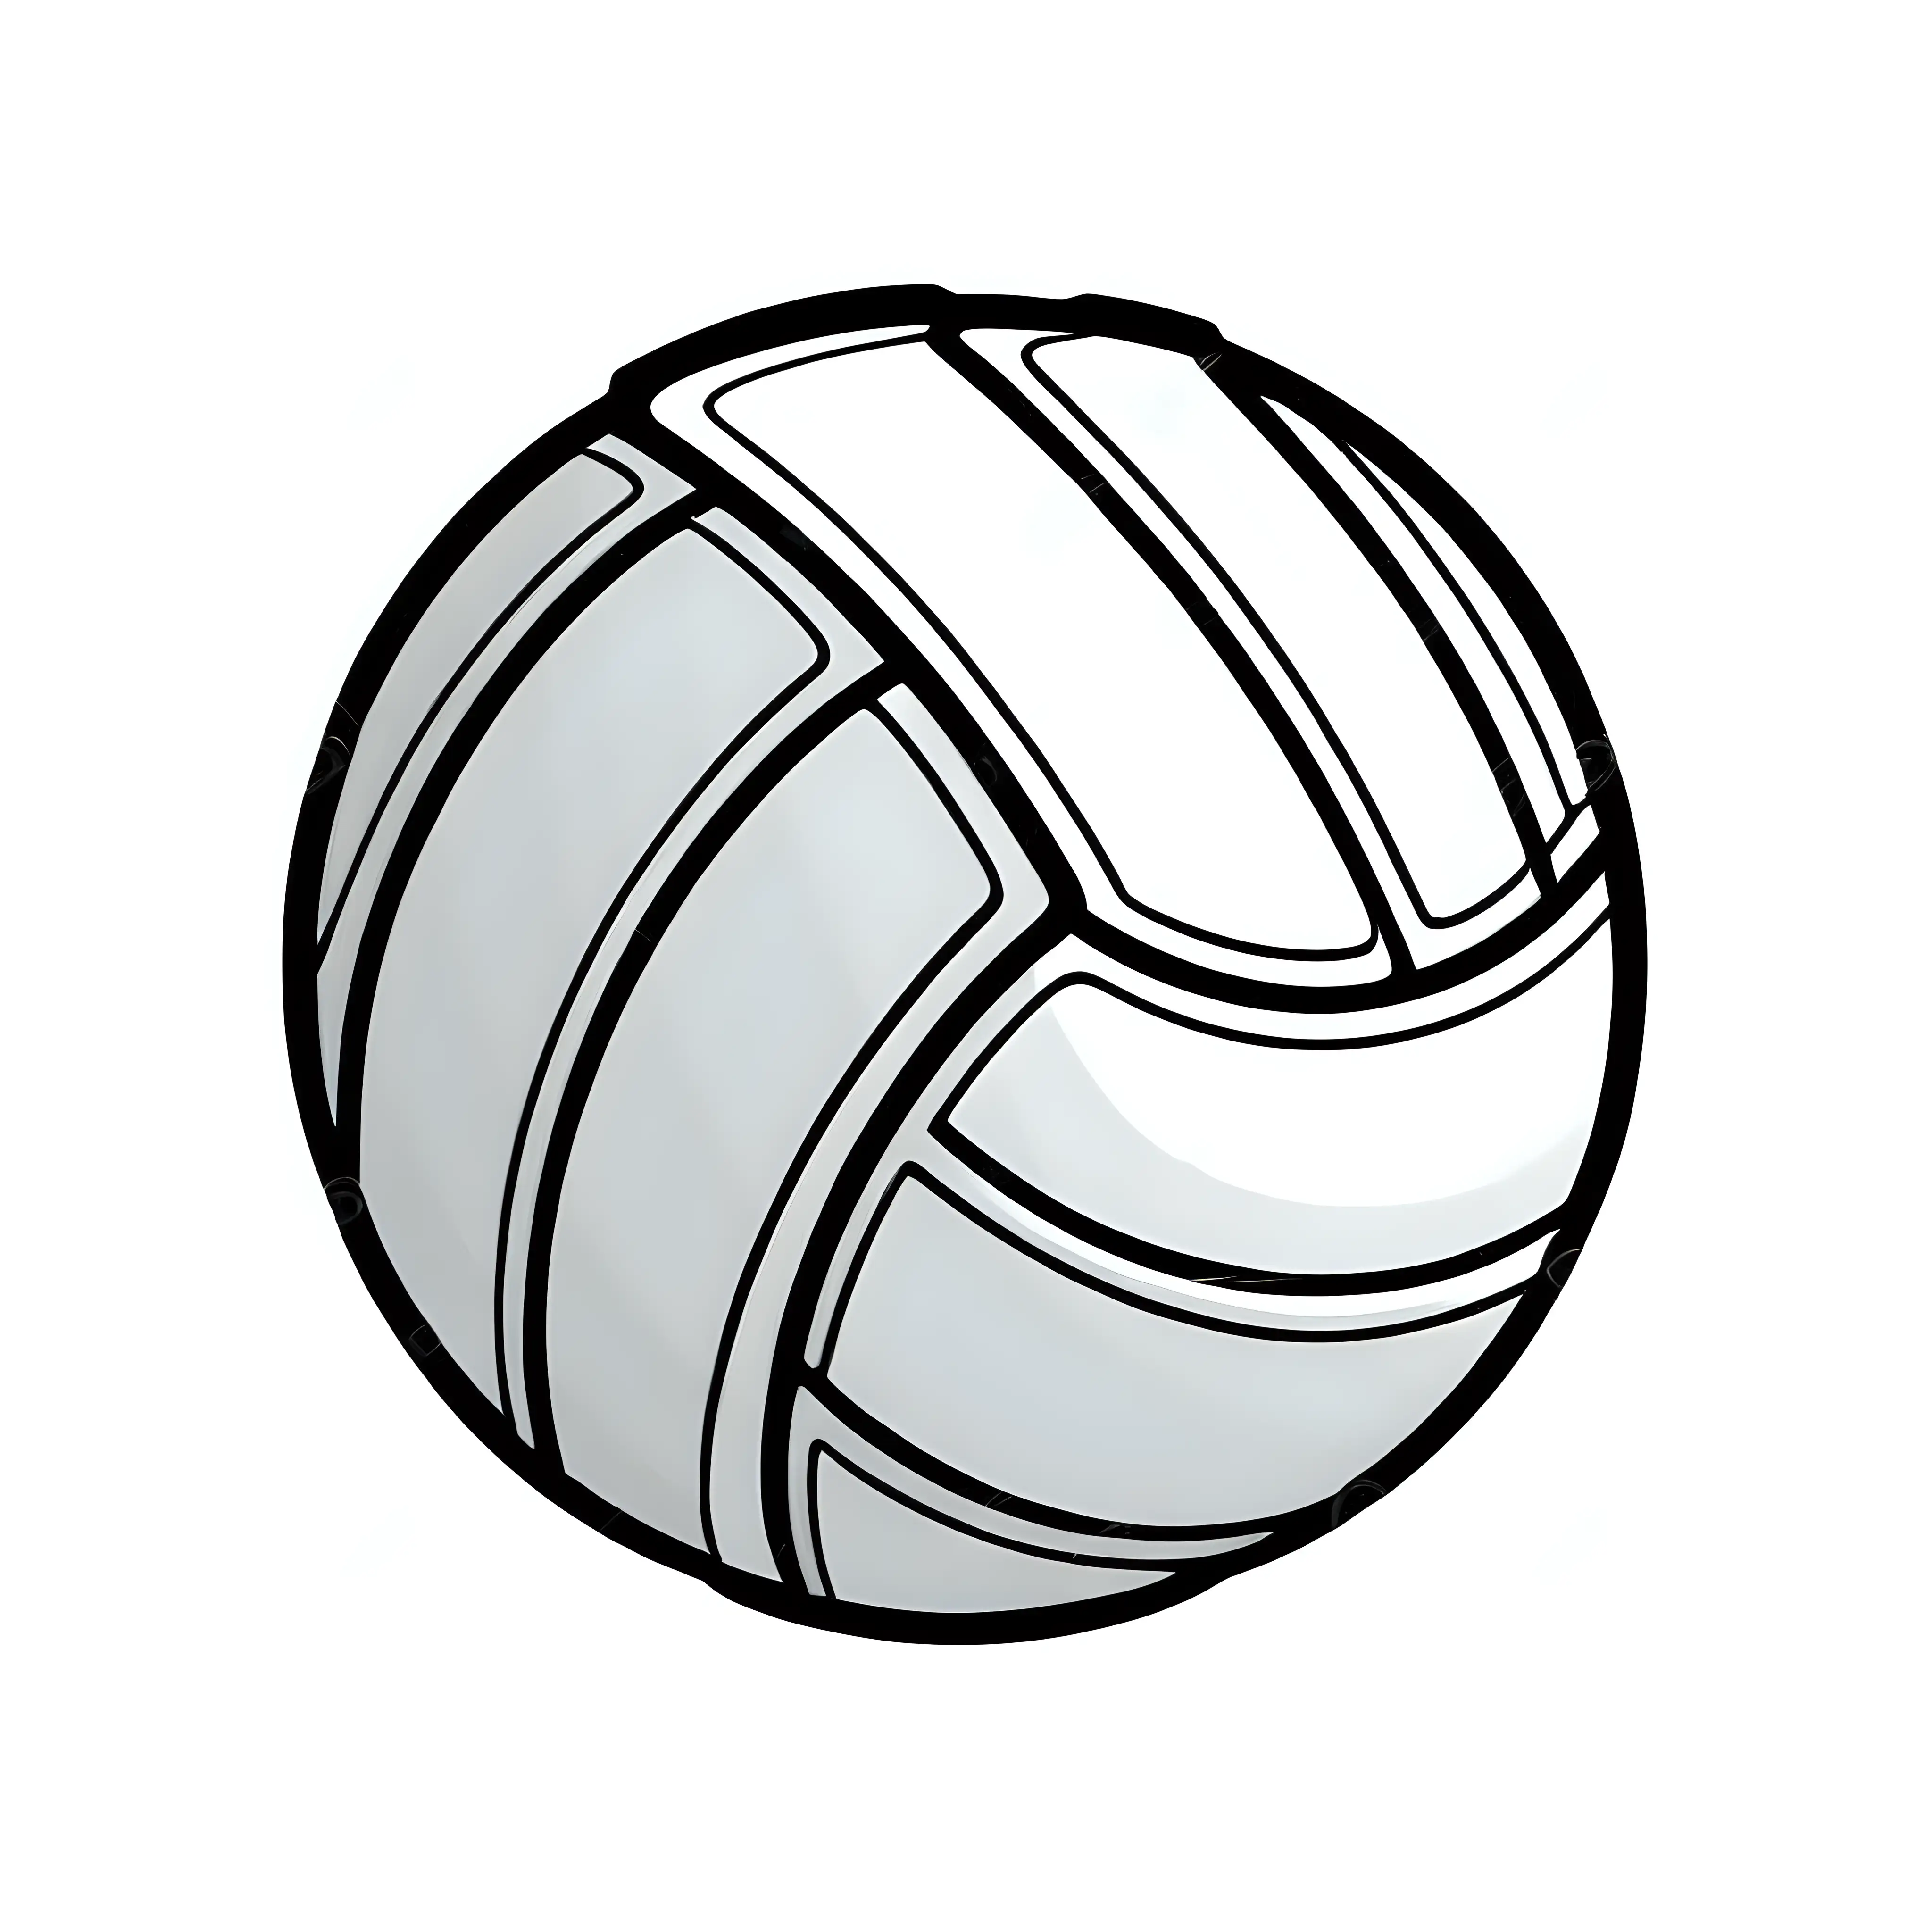 Simple Cartoon White Volleyball Ball Sticker on White Background